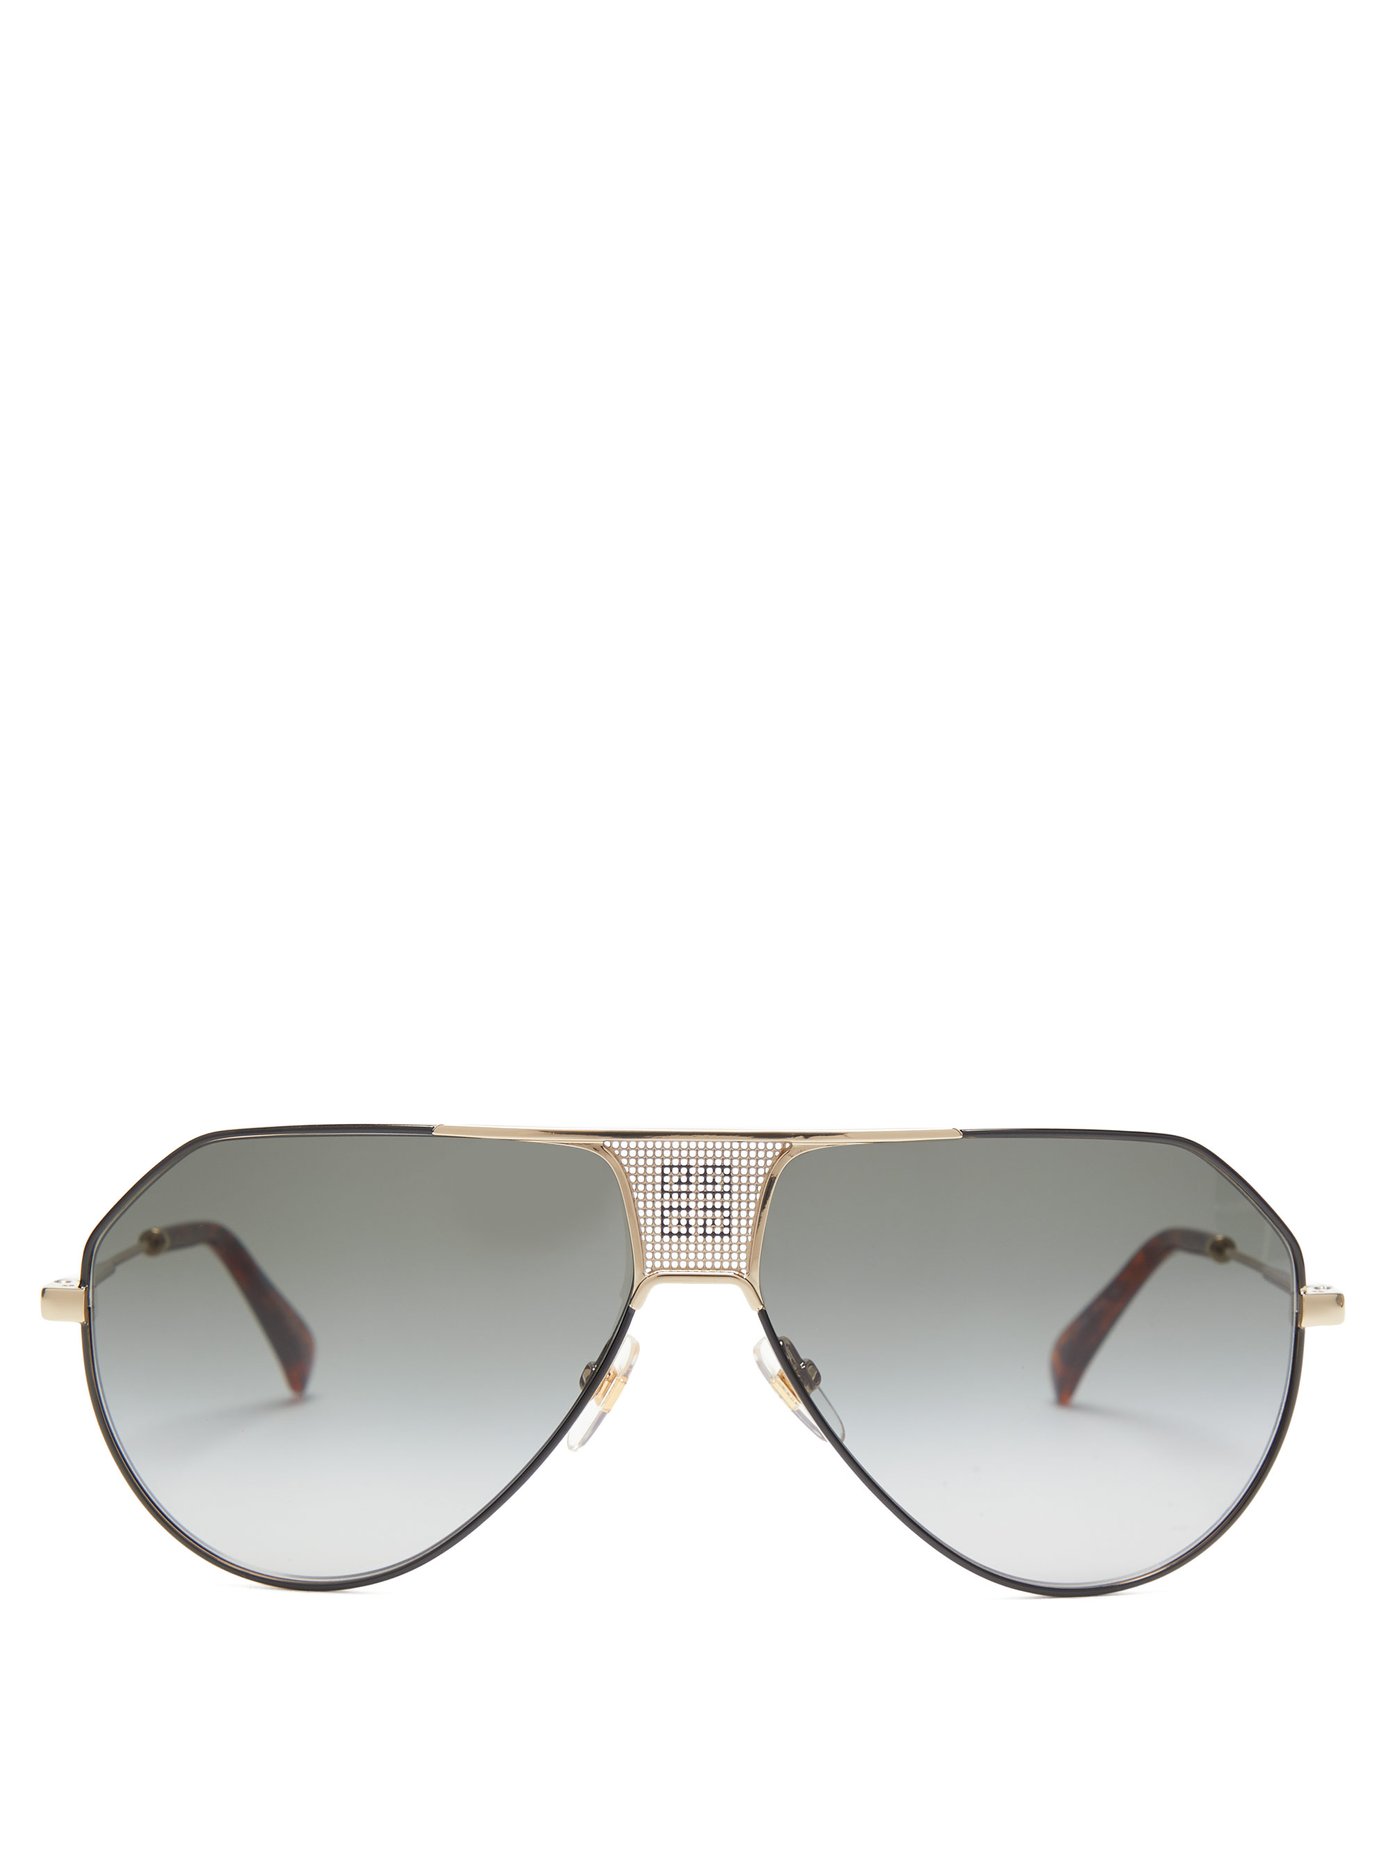 Aviator metal sunglasses | Givenchy 